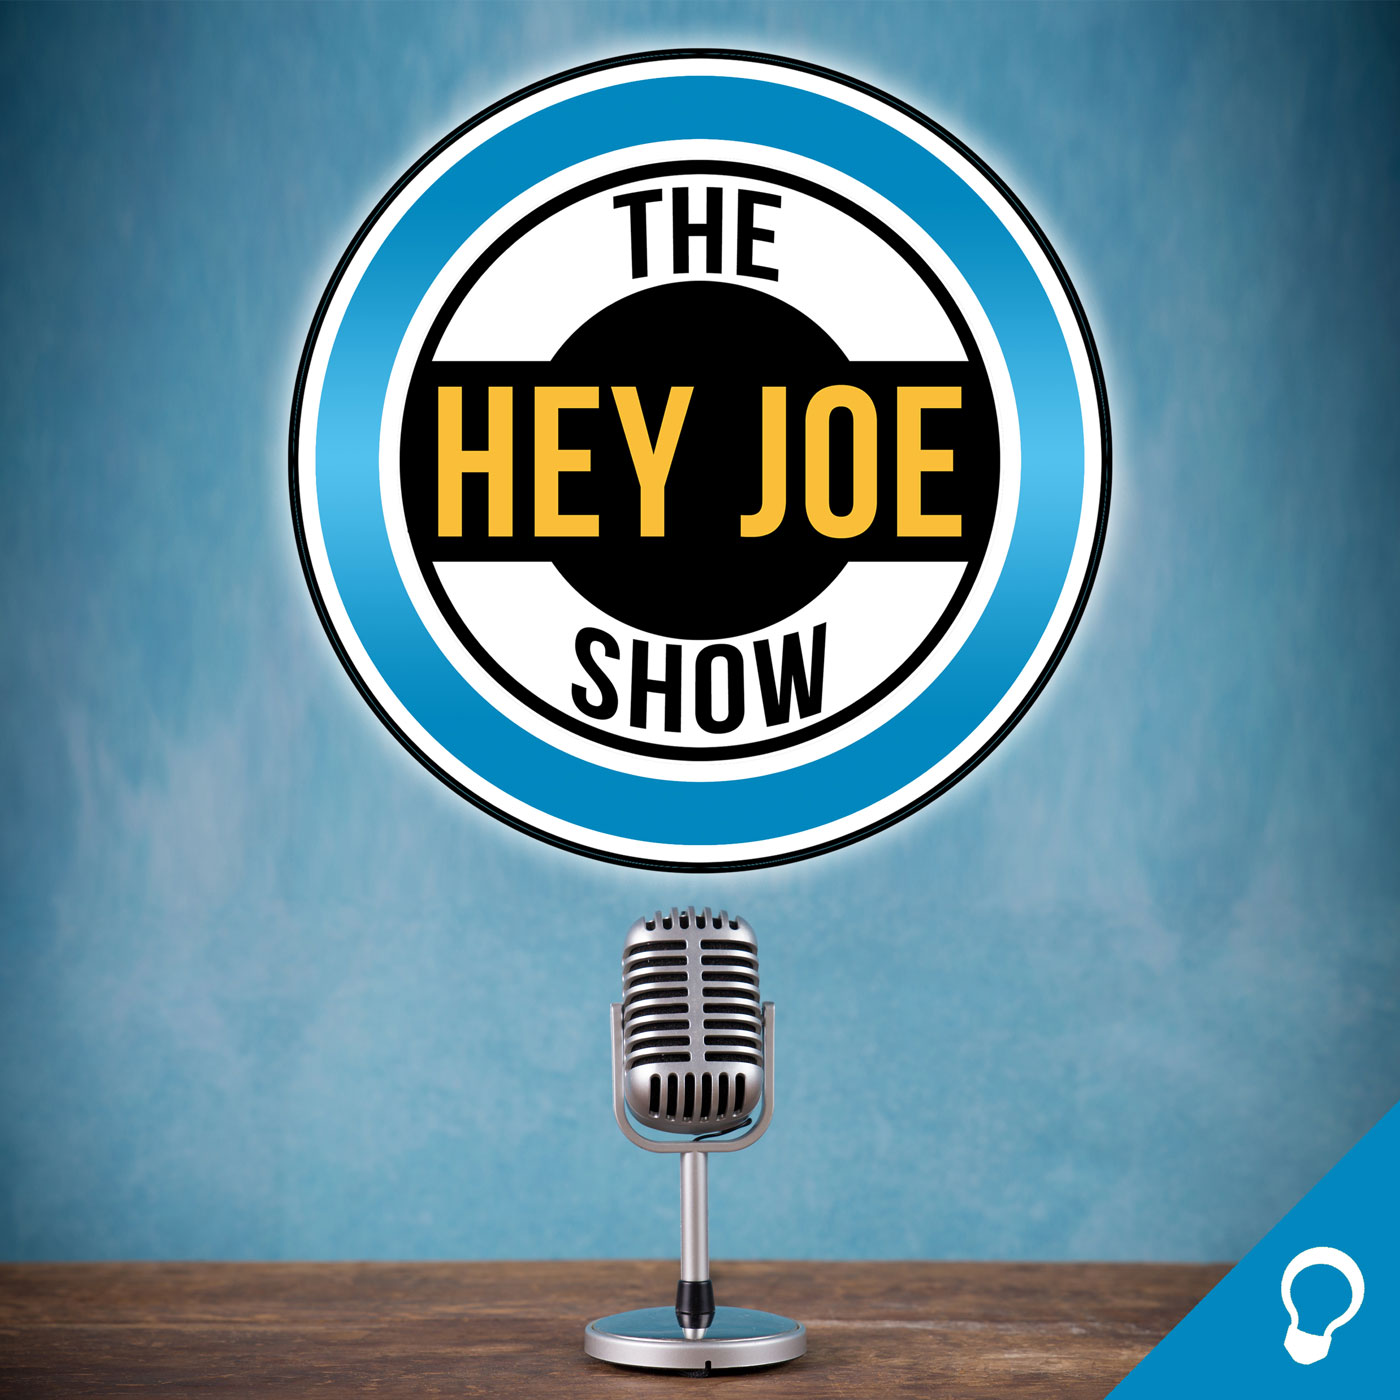 The Hey Joe Show